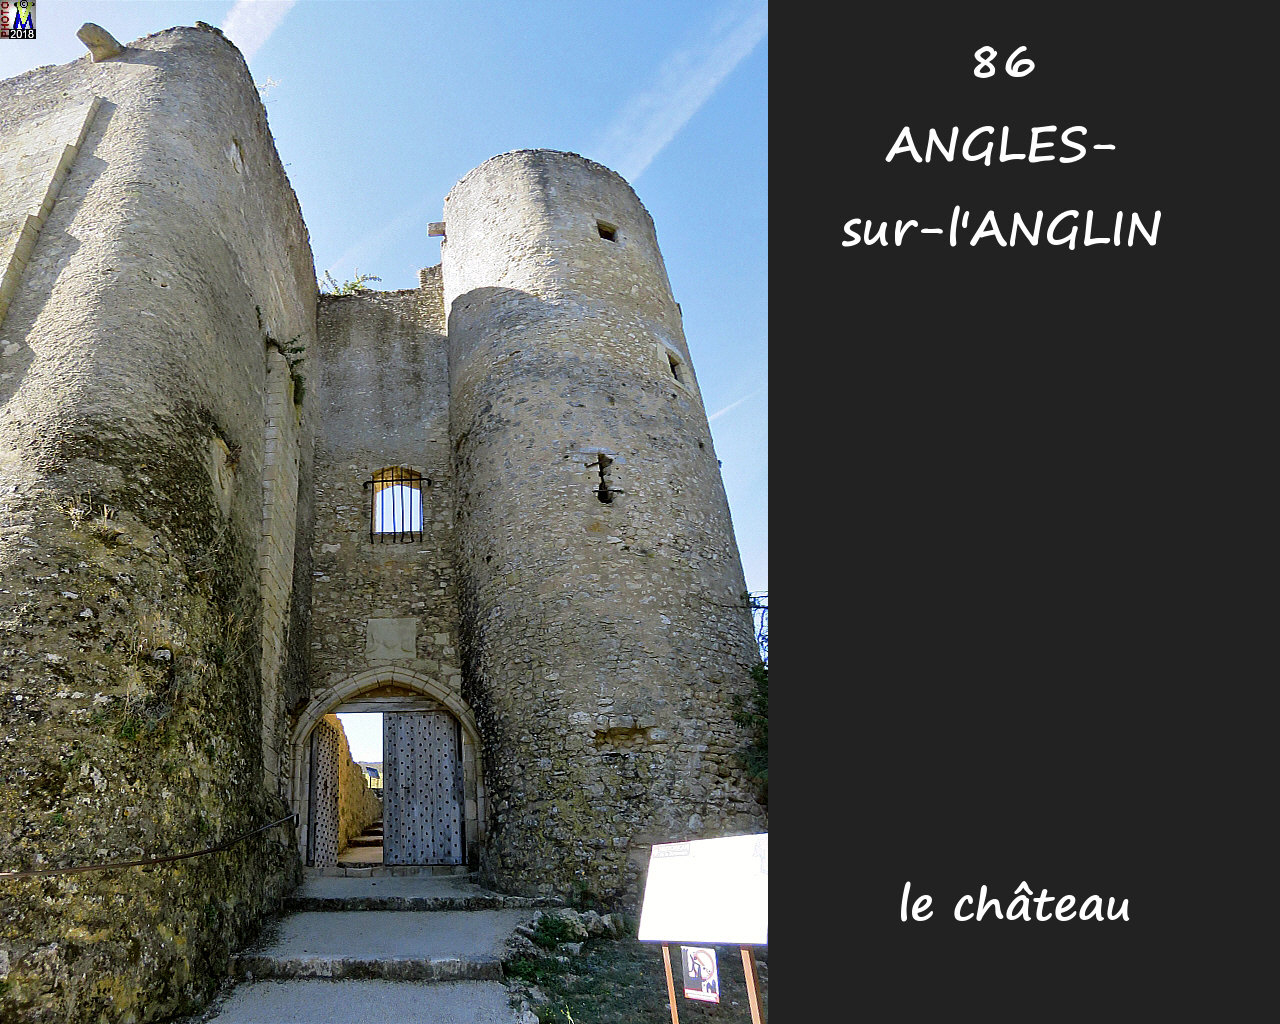 86ANGLES-S-ANGLIN_chateau_1100.jpg